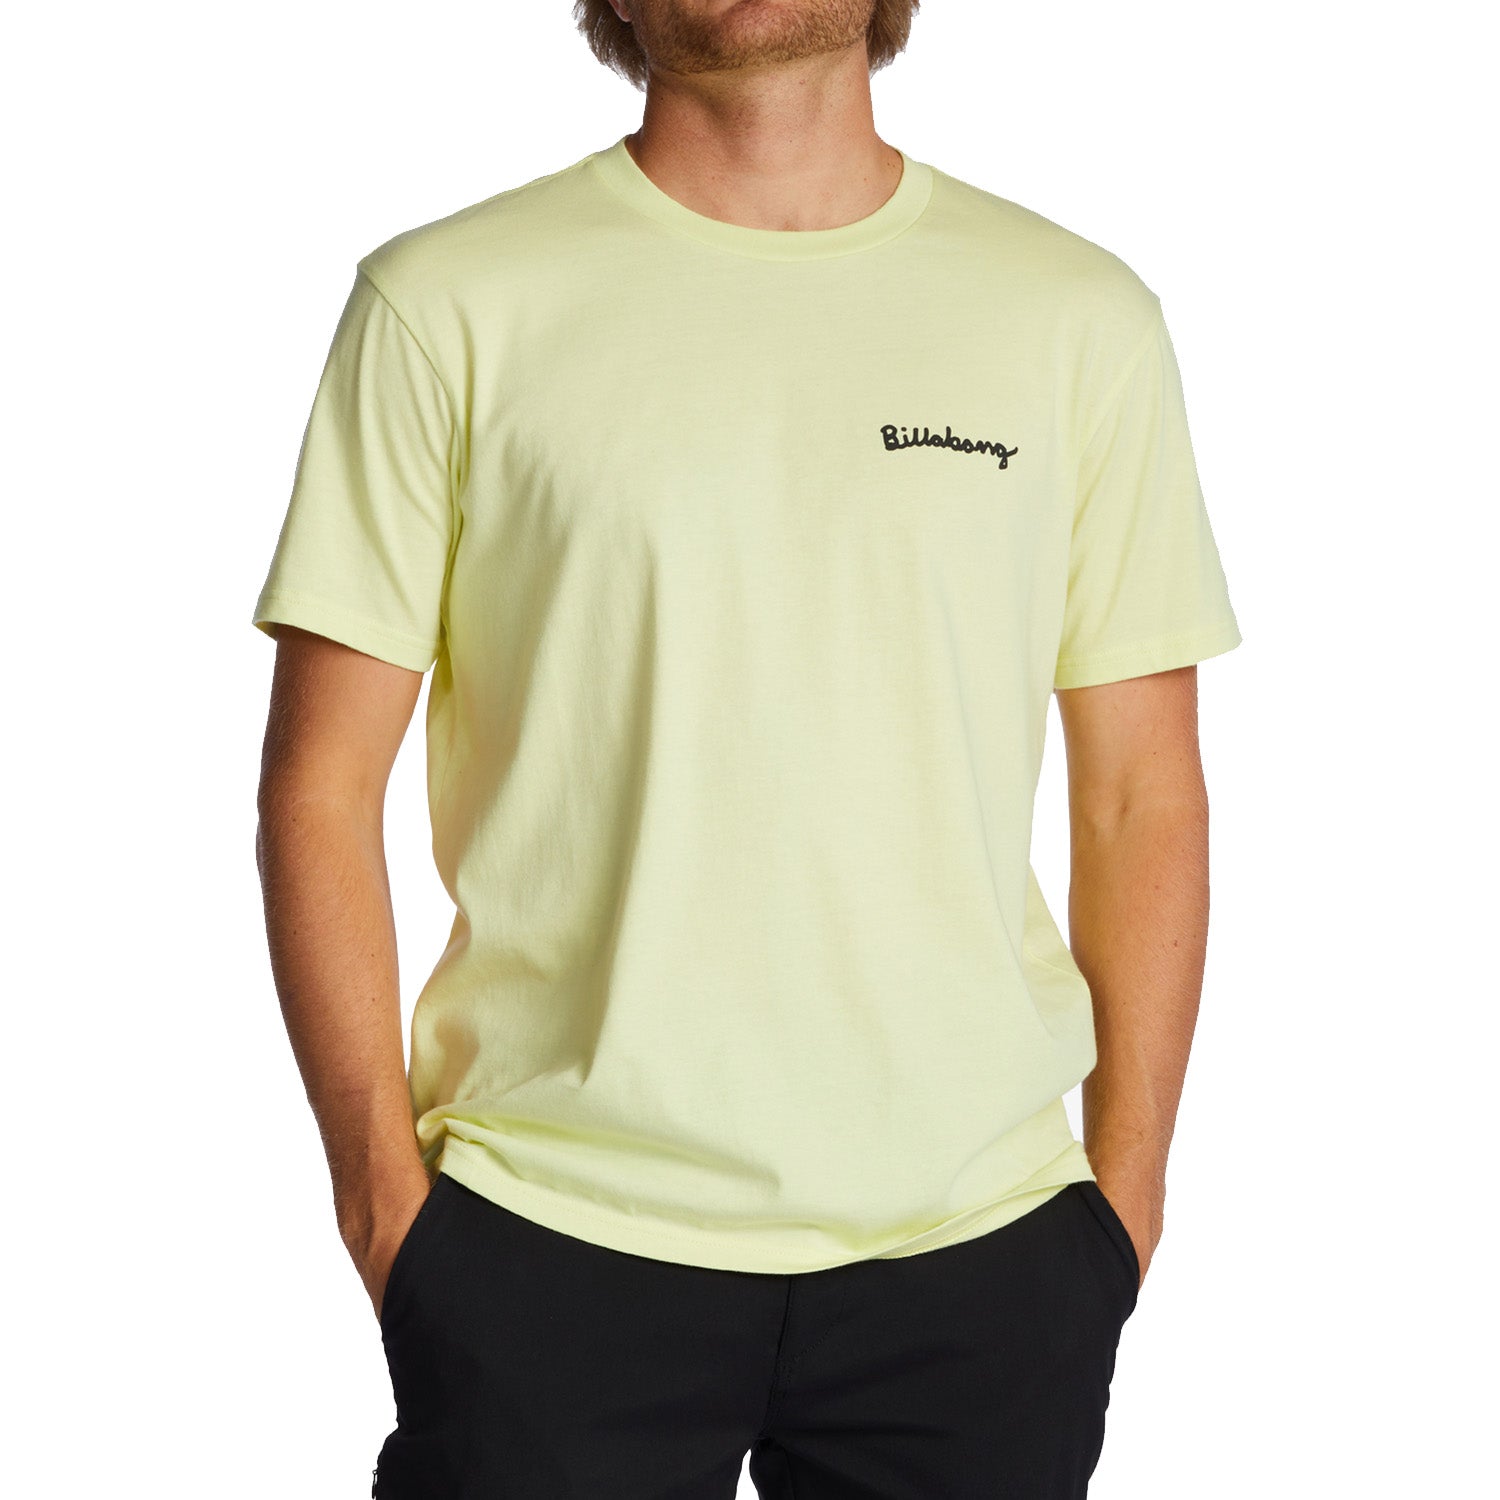 Billabong | Tee Shirt Shine - Light Lime